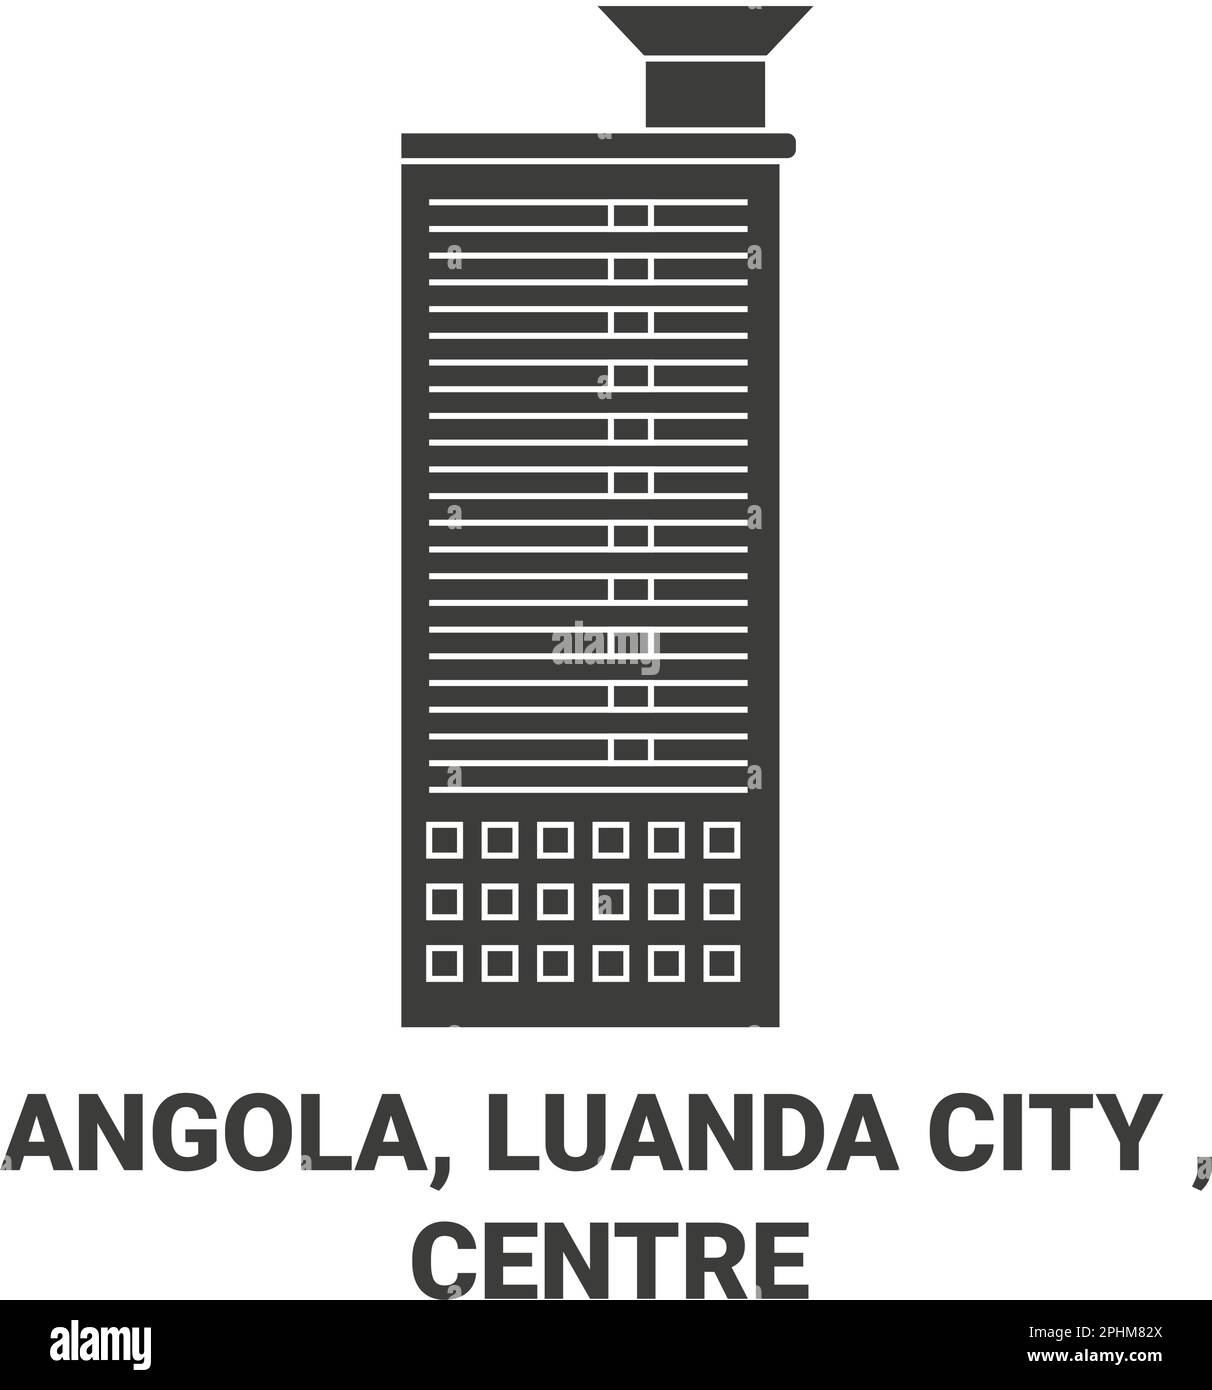 Angola, Luanda City , Centre Voyage illustration du vecteur de repère Illustration de Vecteur